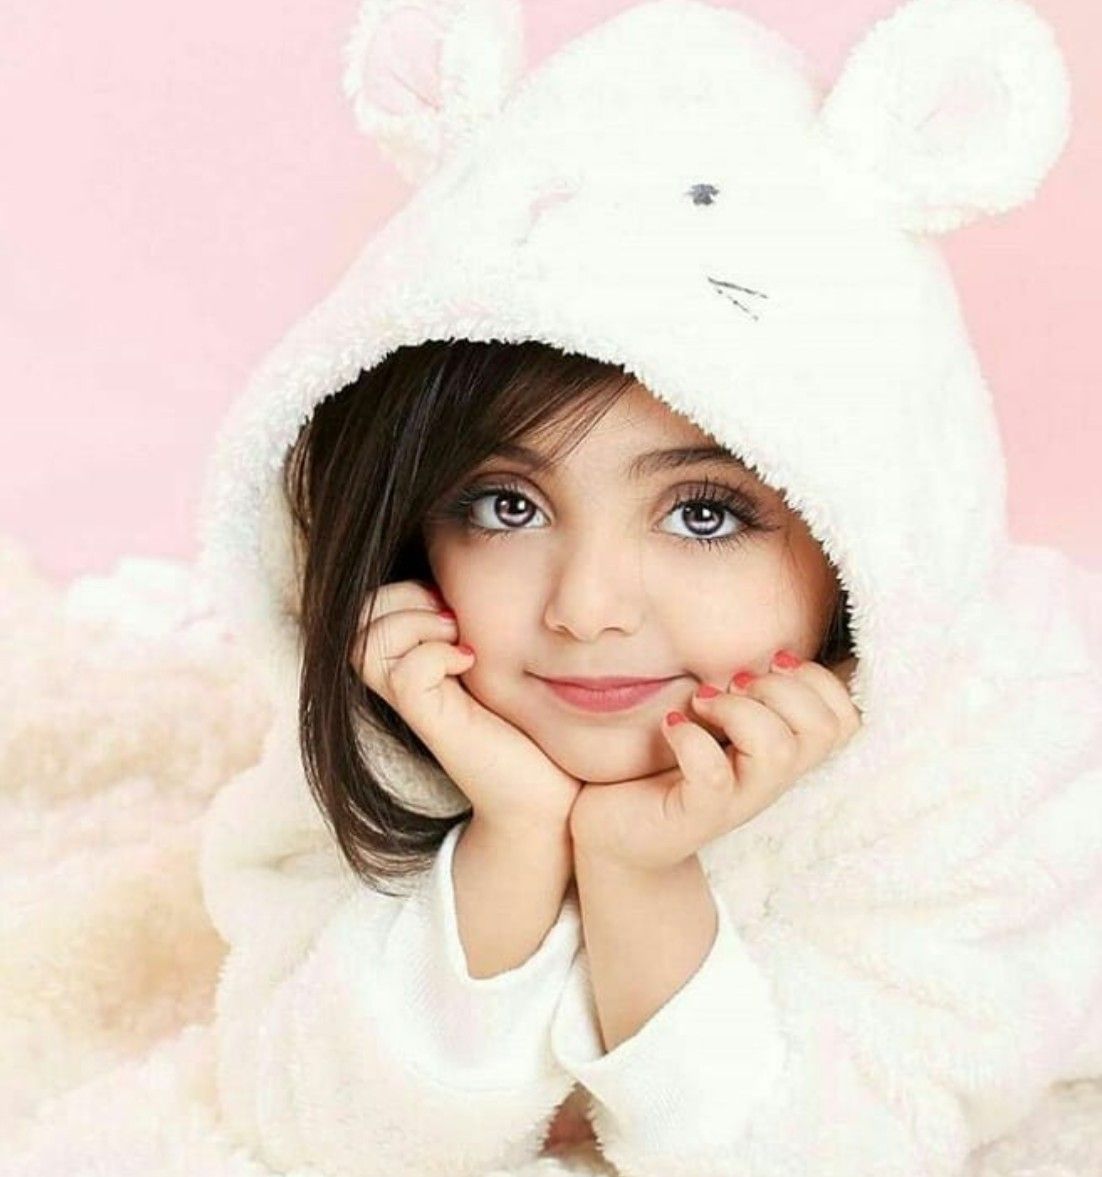 Girls photo ideas. Cute baby girl image